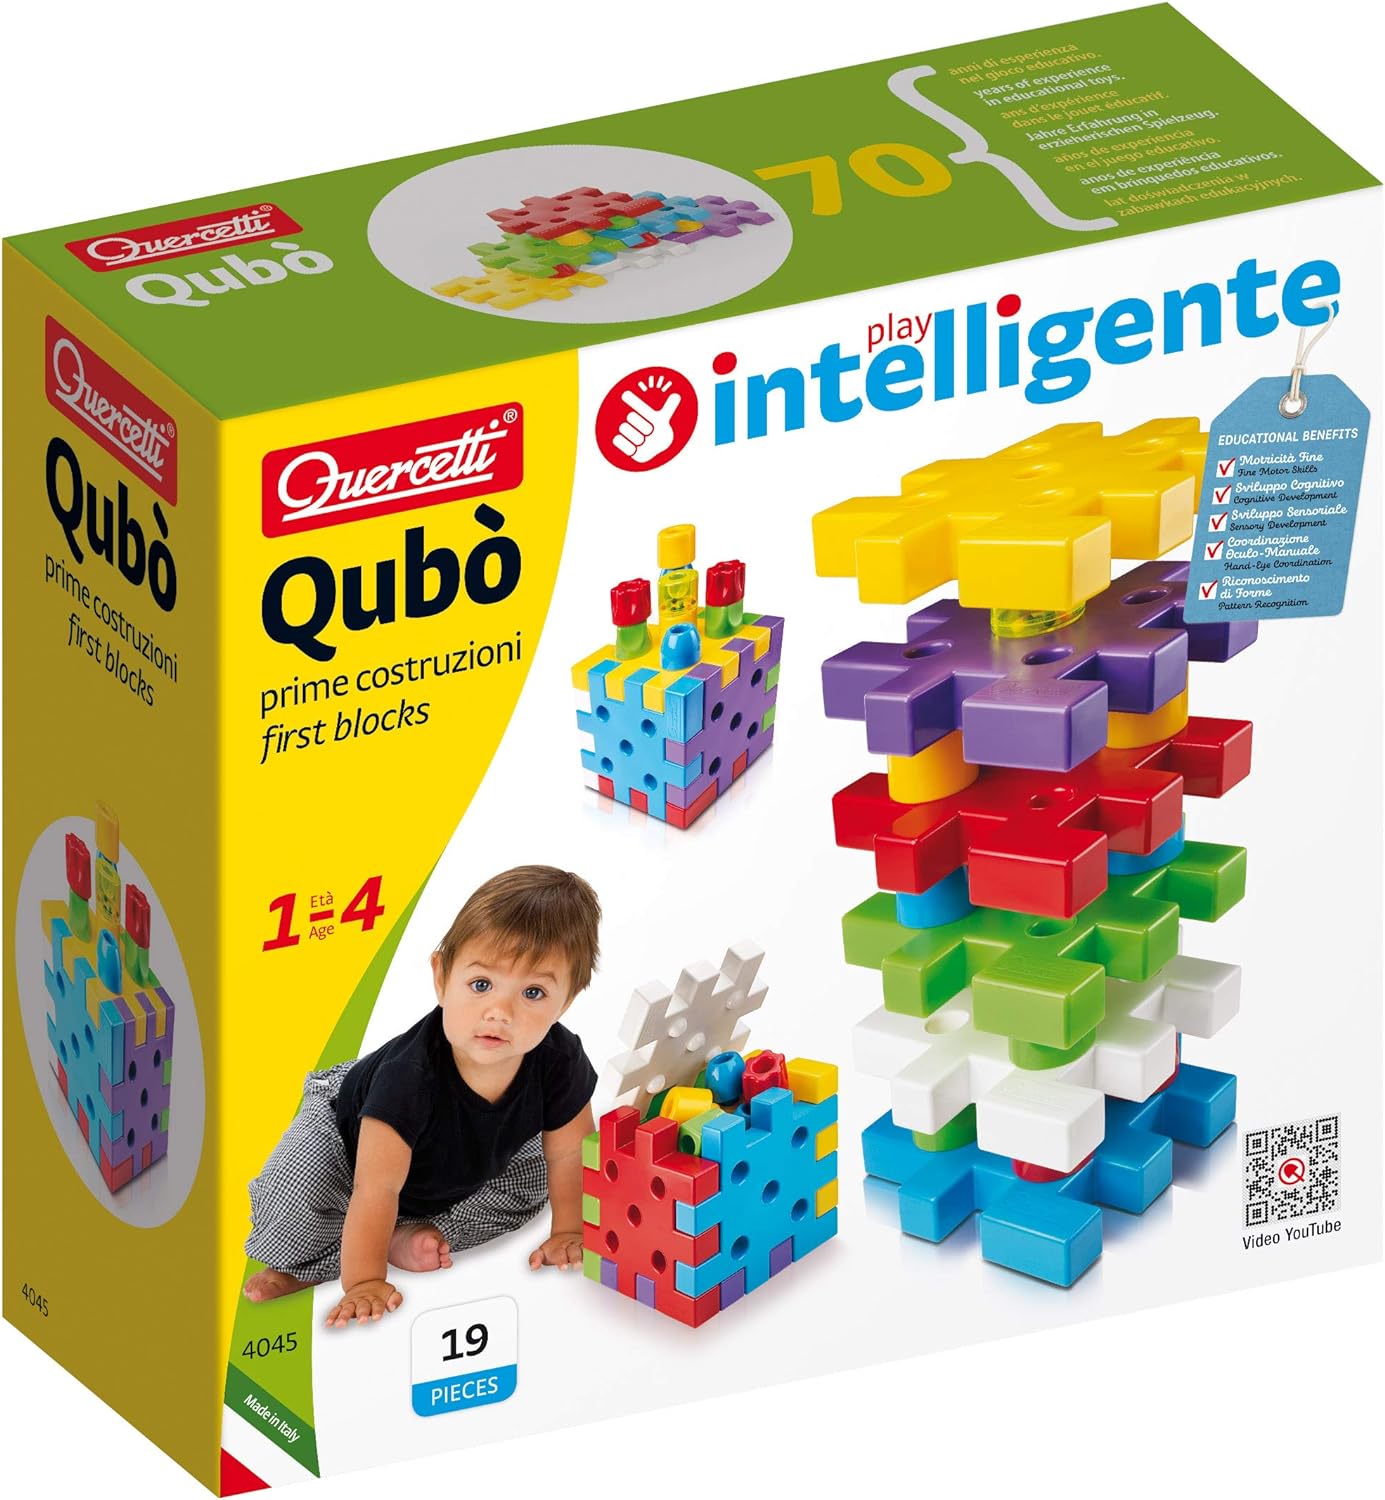 Quercetti - Qubo, First Blocks